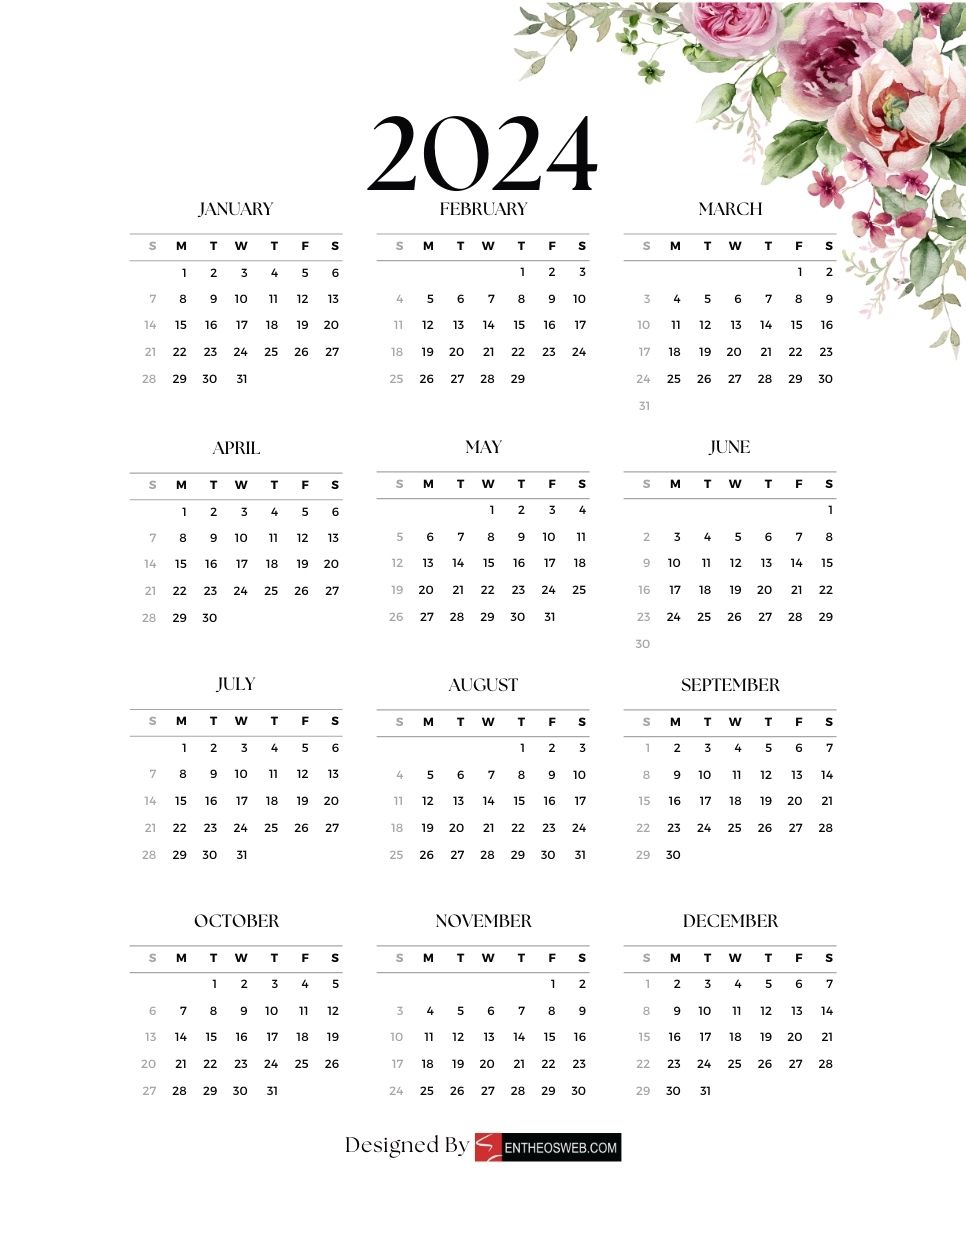 2024 Calendars – Free Printable Calendar Designs | Entheosweb | Printable Calendar 2024 Floral